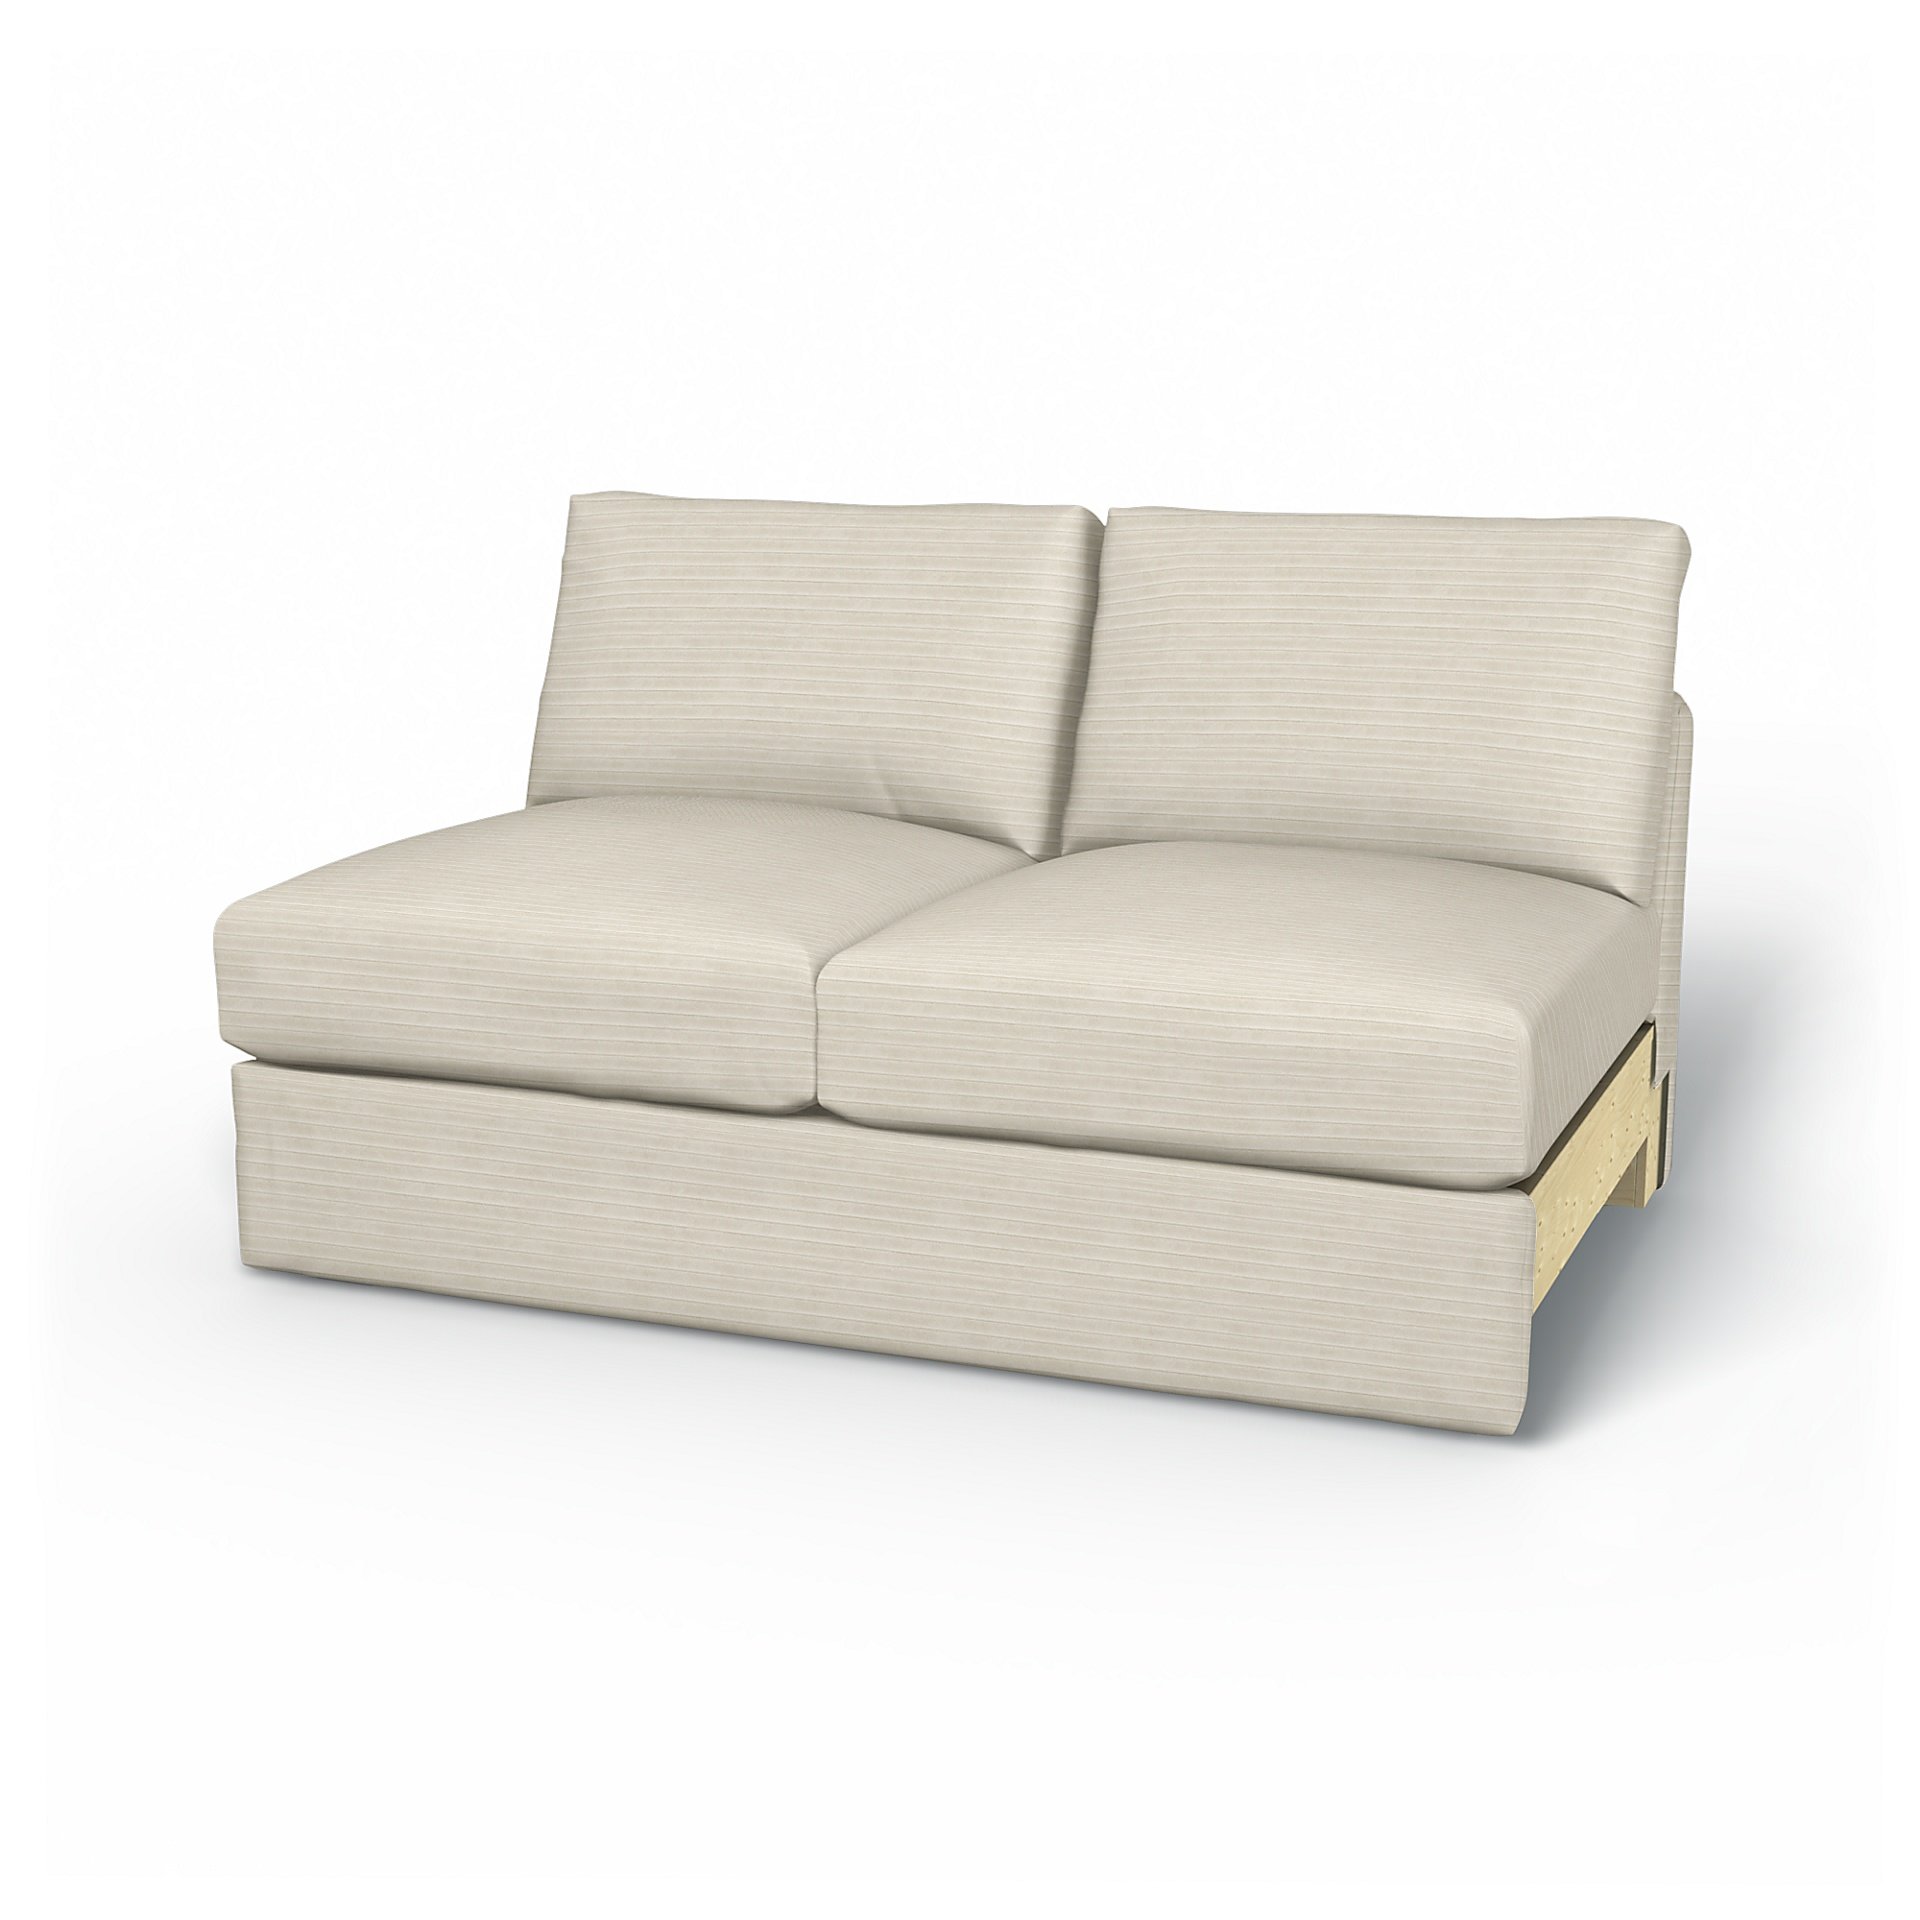 IKEA - Vimle 2 Seat Section Cover, Tofu, Corduroy - Bemz